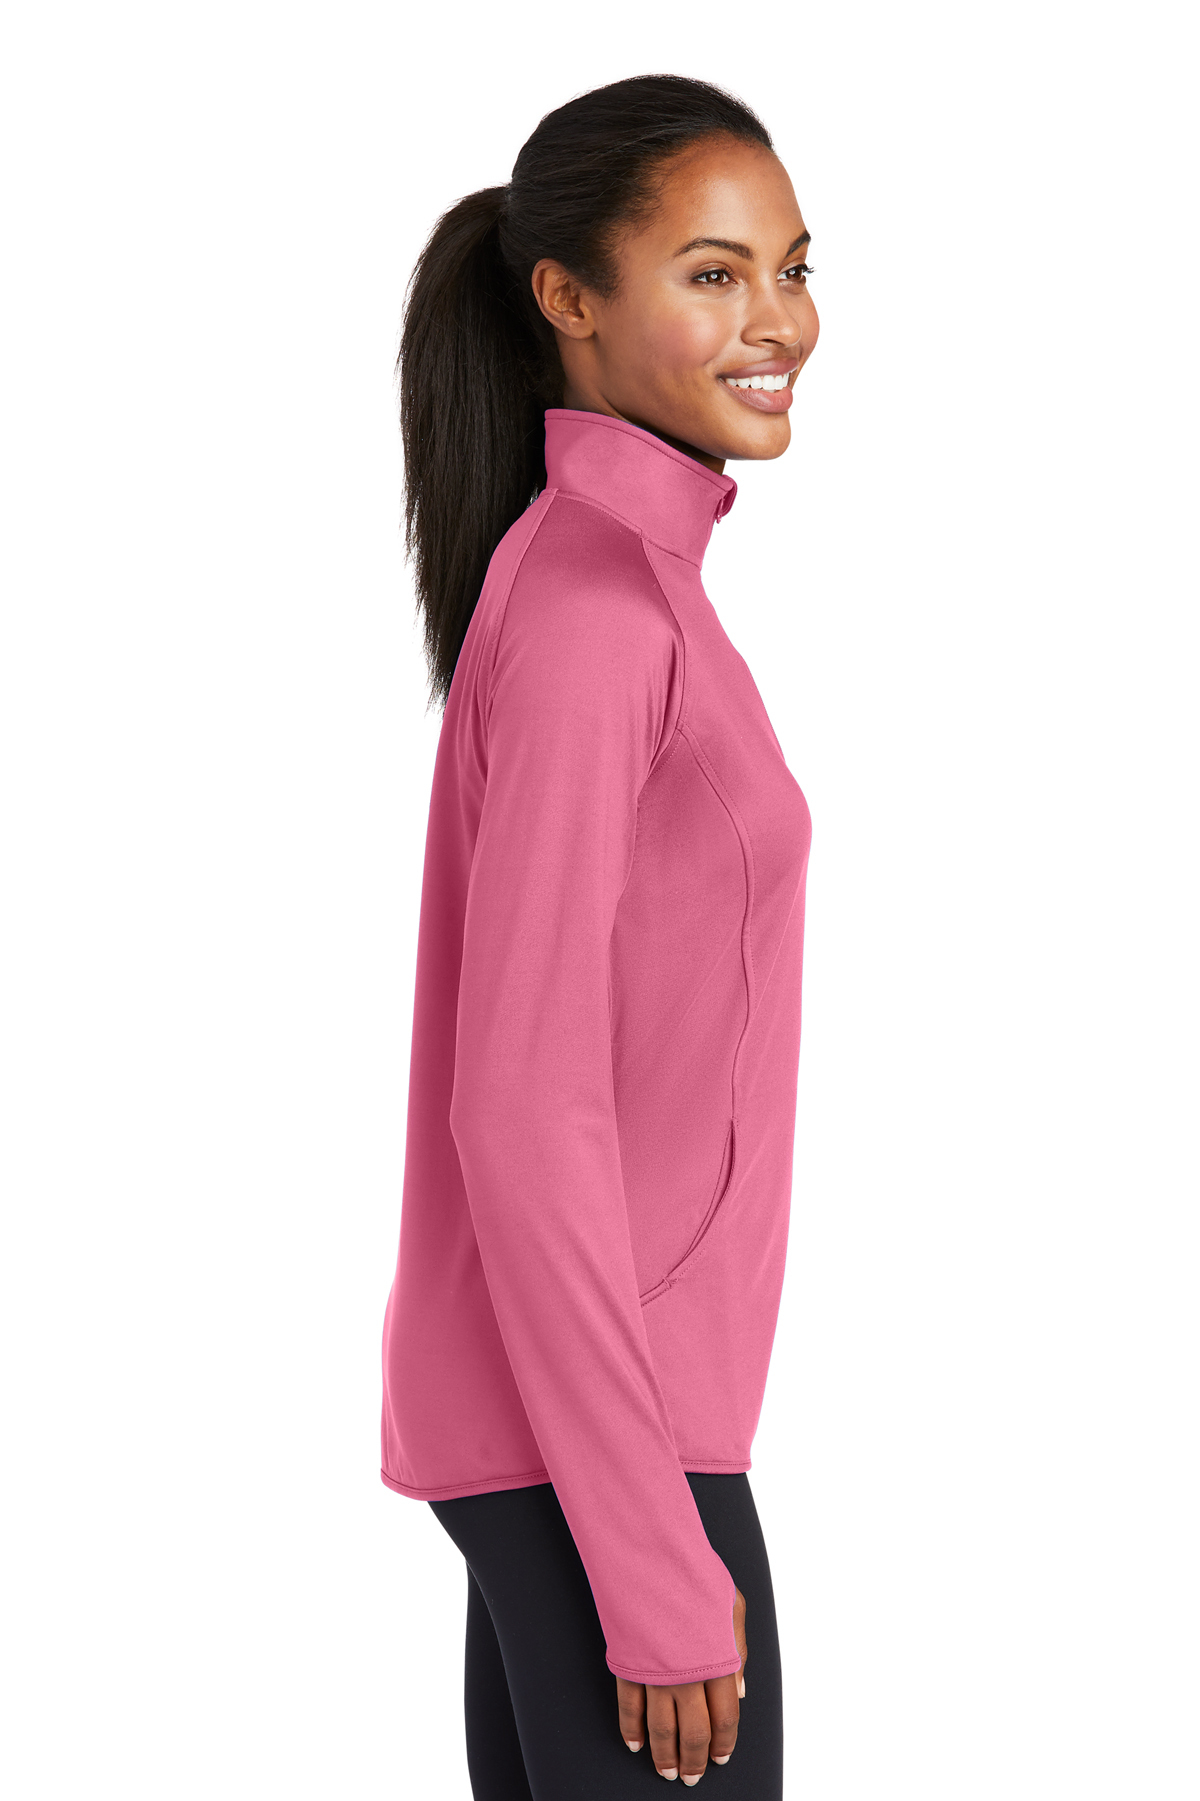 Sport-Tek ® Ladies Sport-Wick ® Stretch 1/2-Zip Pullover. Lst850  S White 